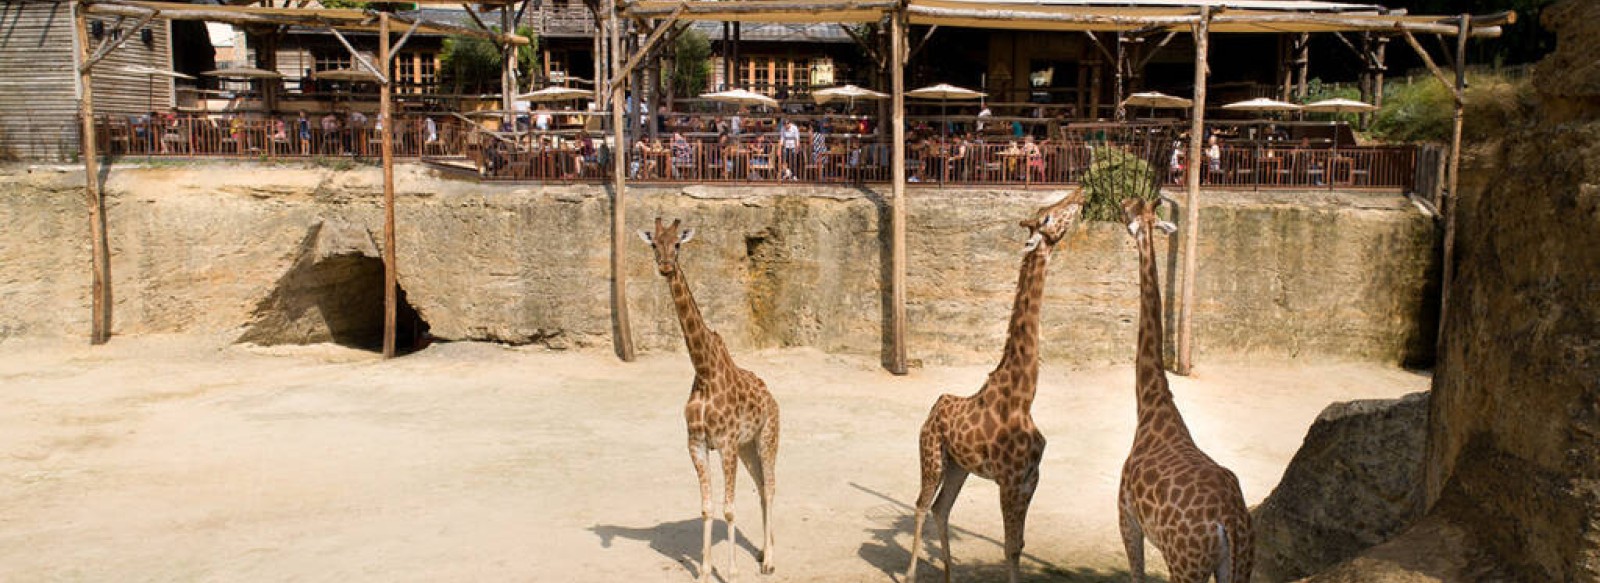 Restaurant Le Camp des Girafes